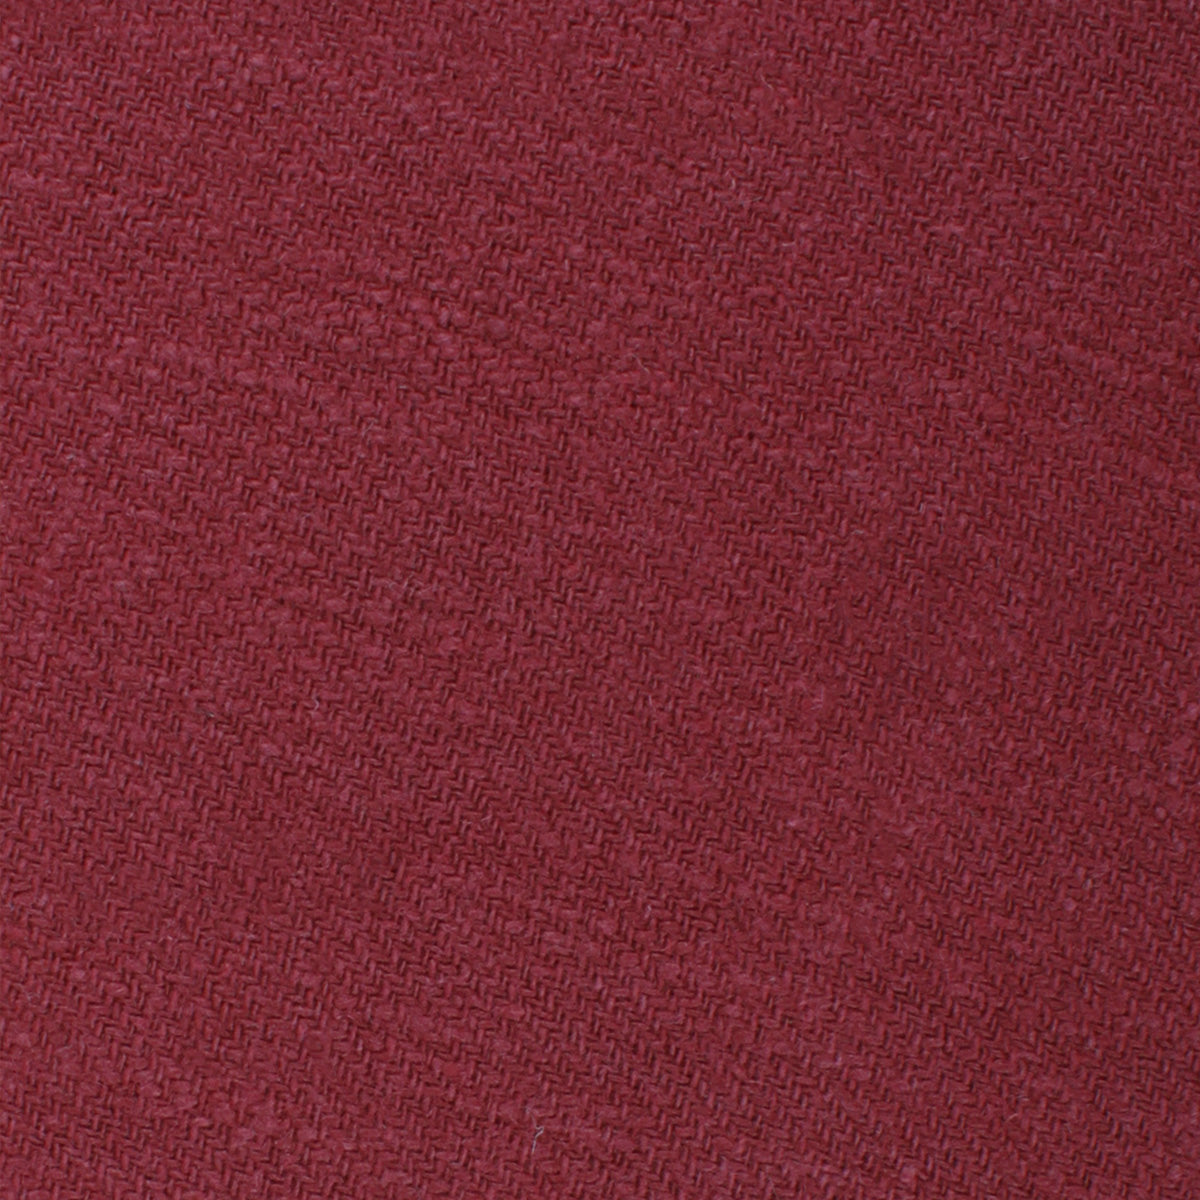 Cabernet Burgundy Linen Fabric Swatch